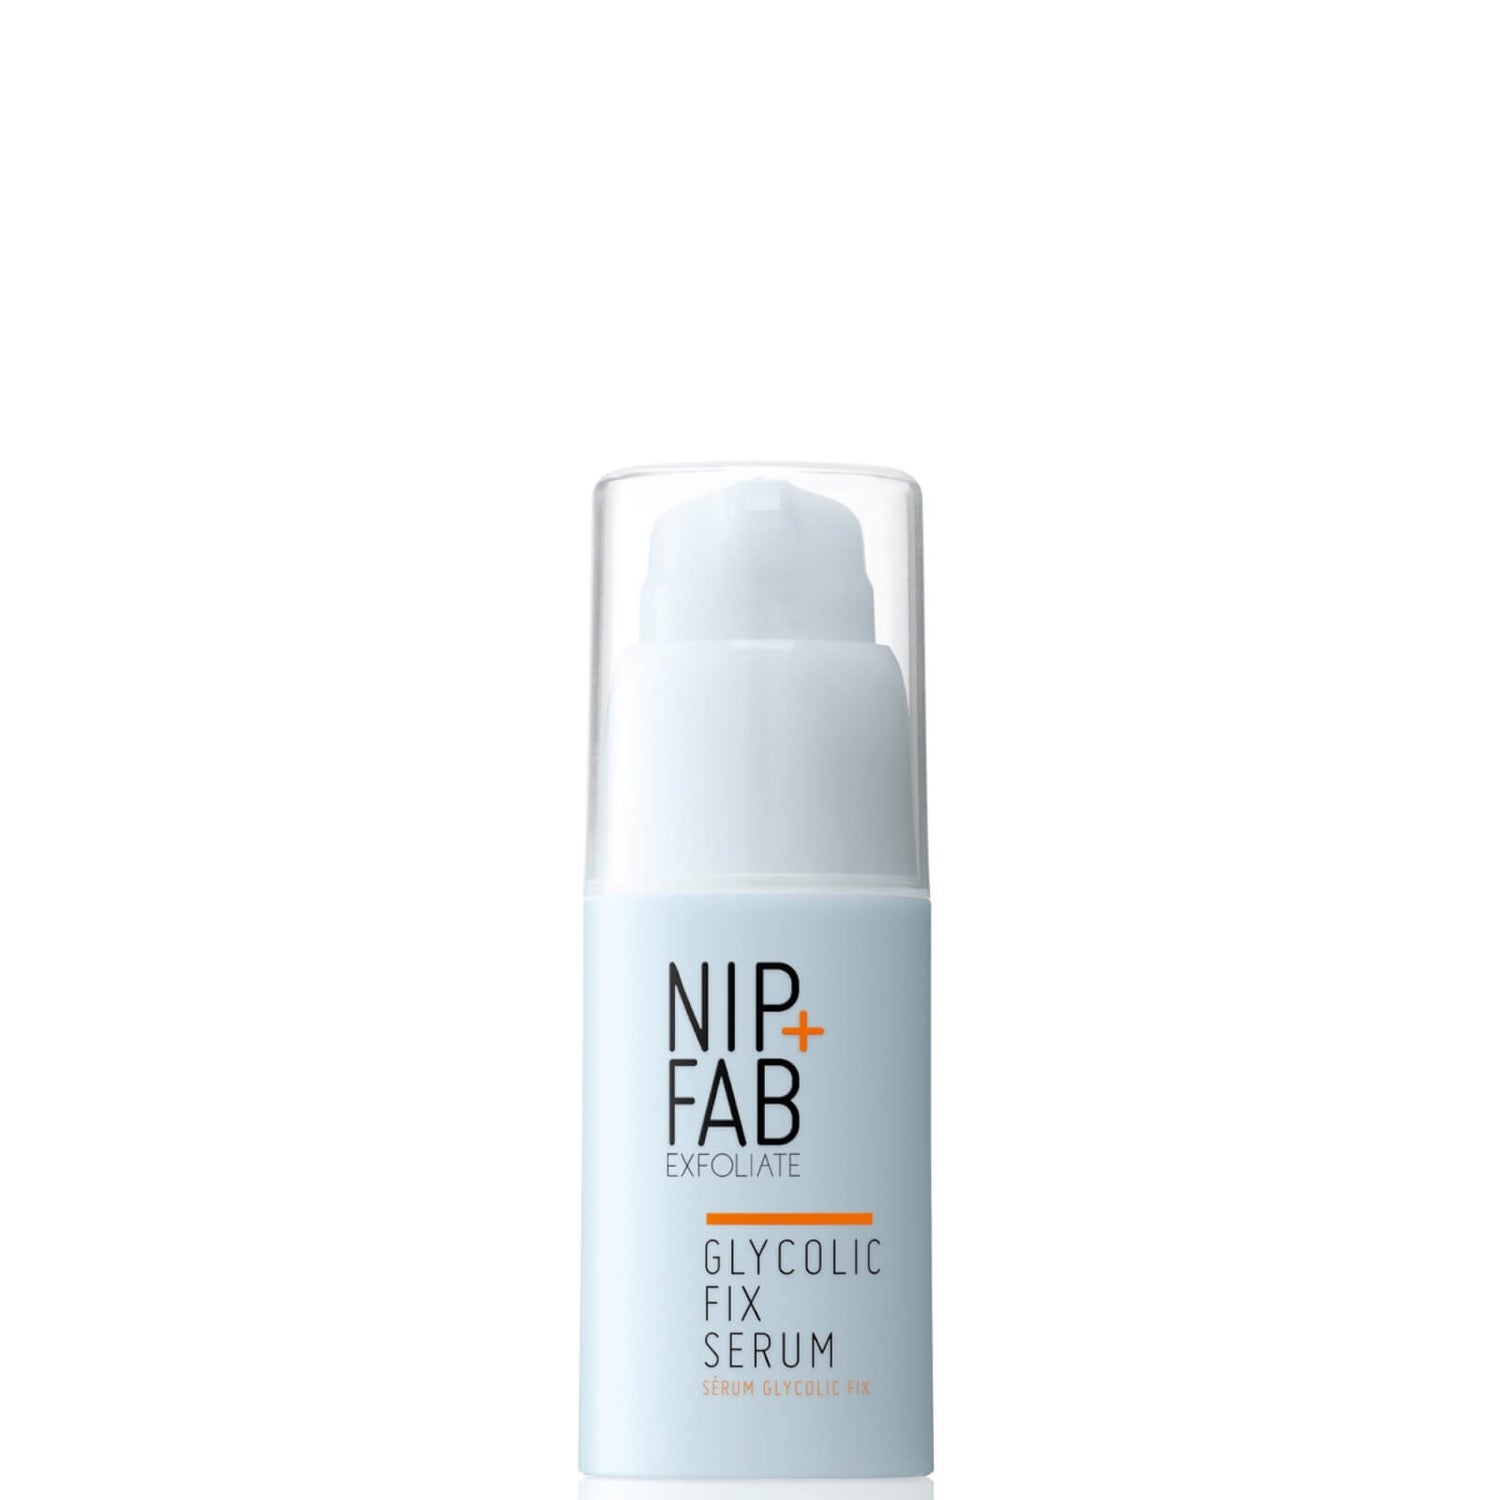 NIP + FAB Glycolic Fix Serum (NIP + FAB グリコリック フィックス セラム) 30ml